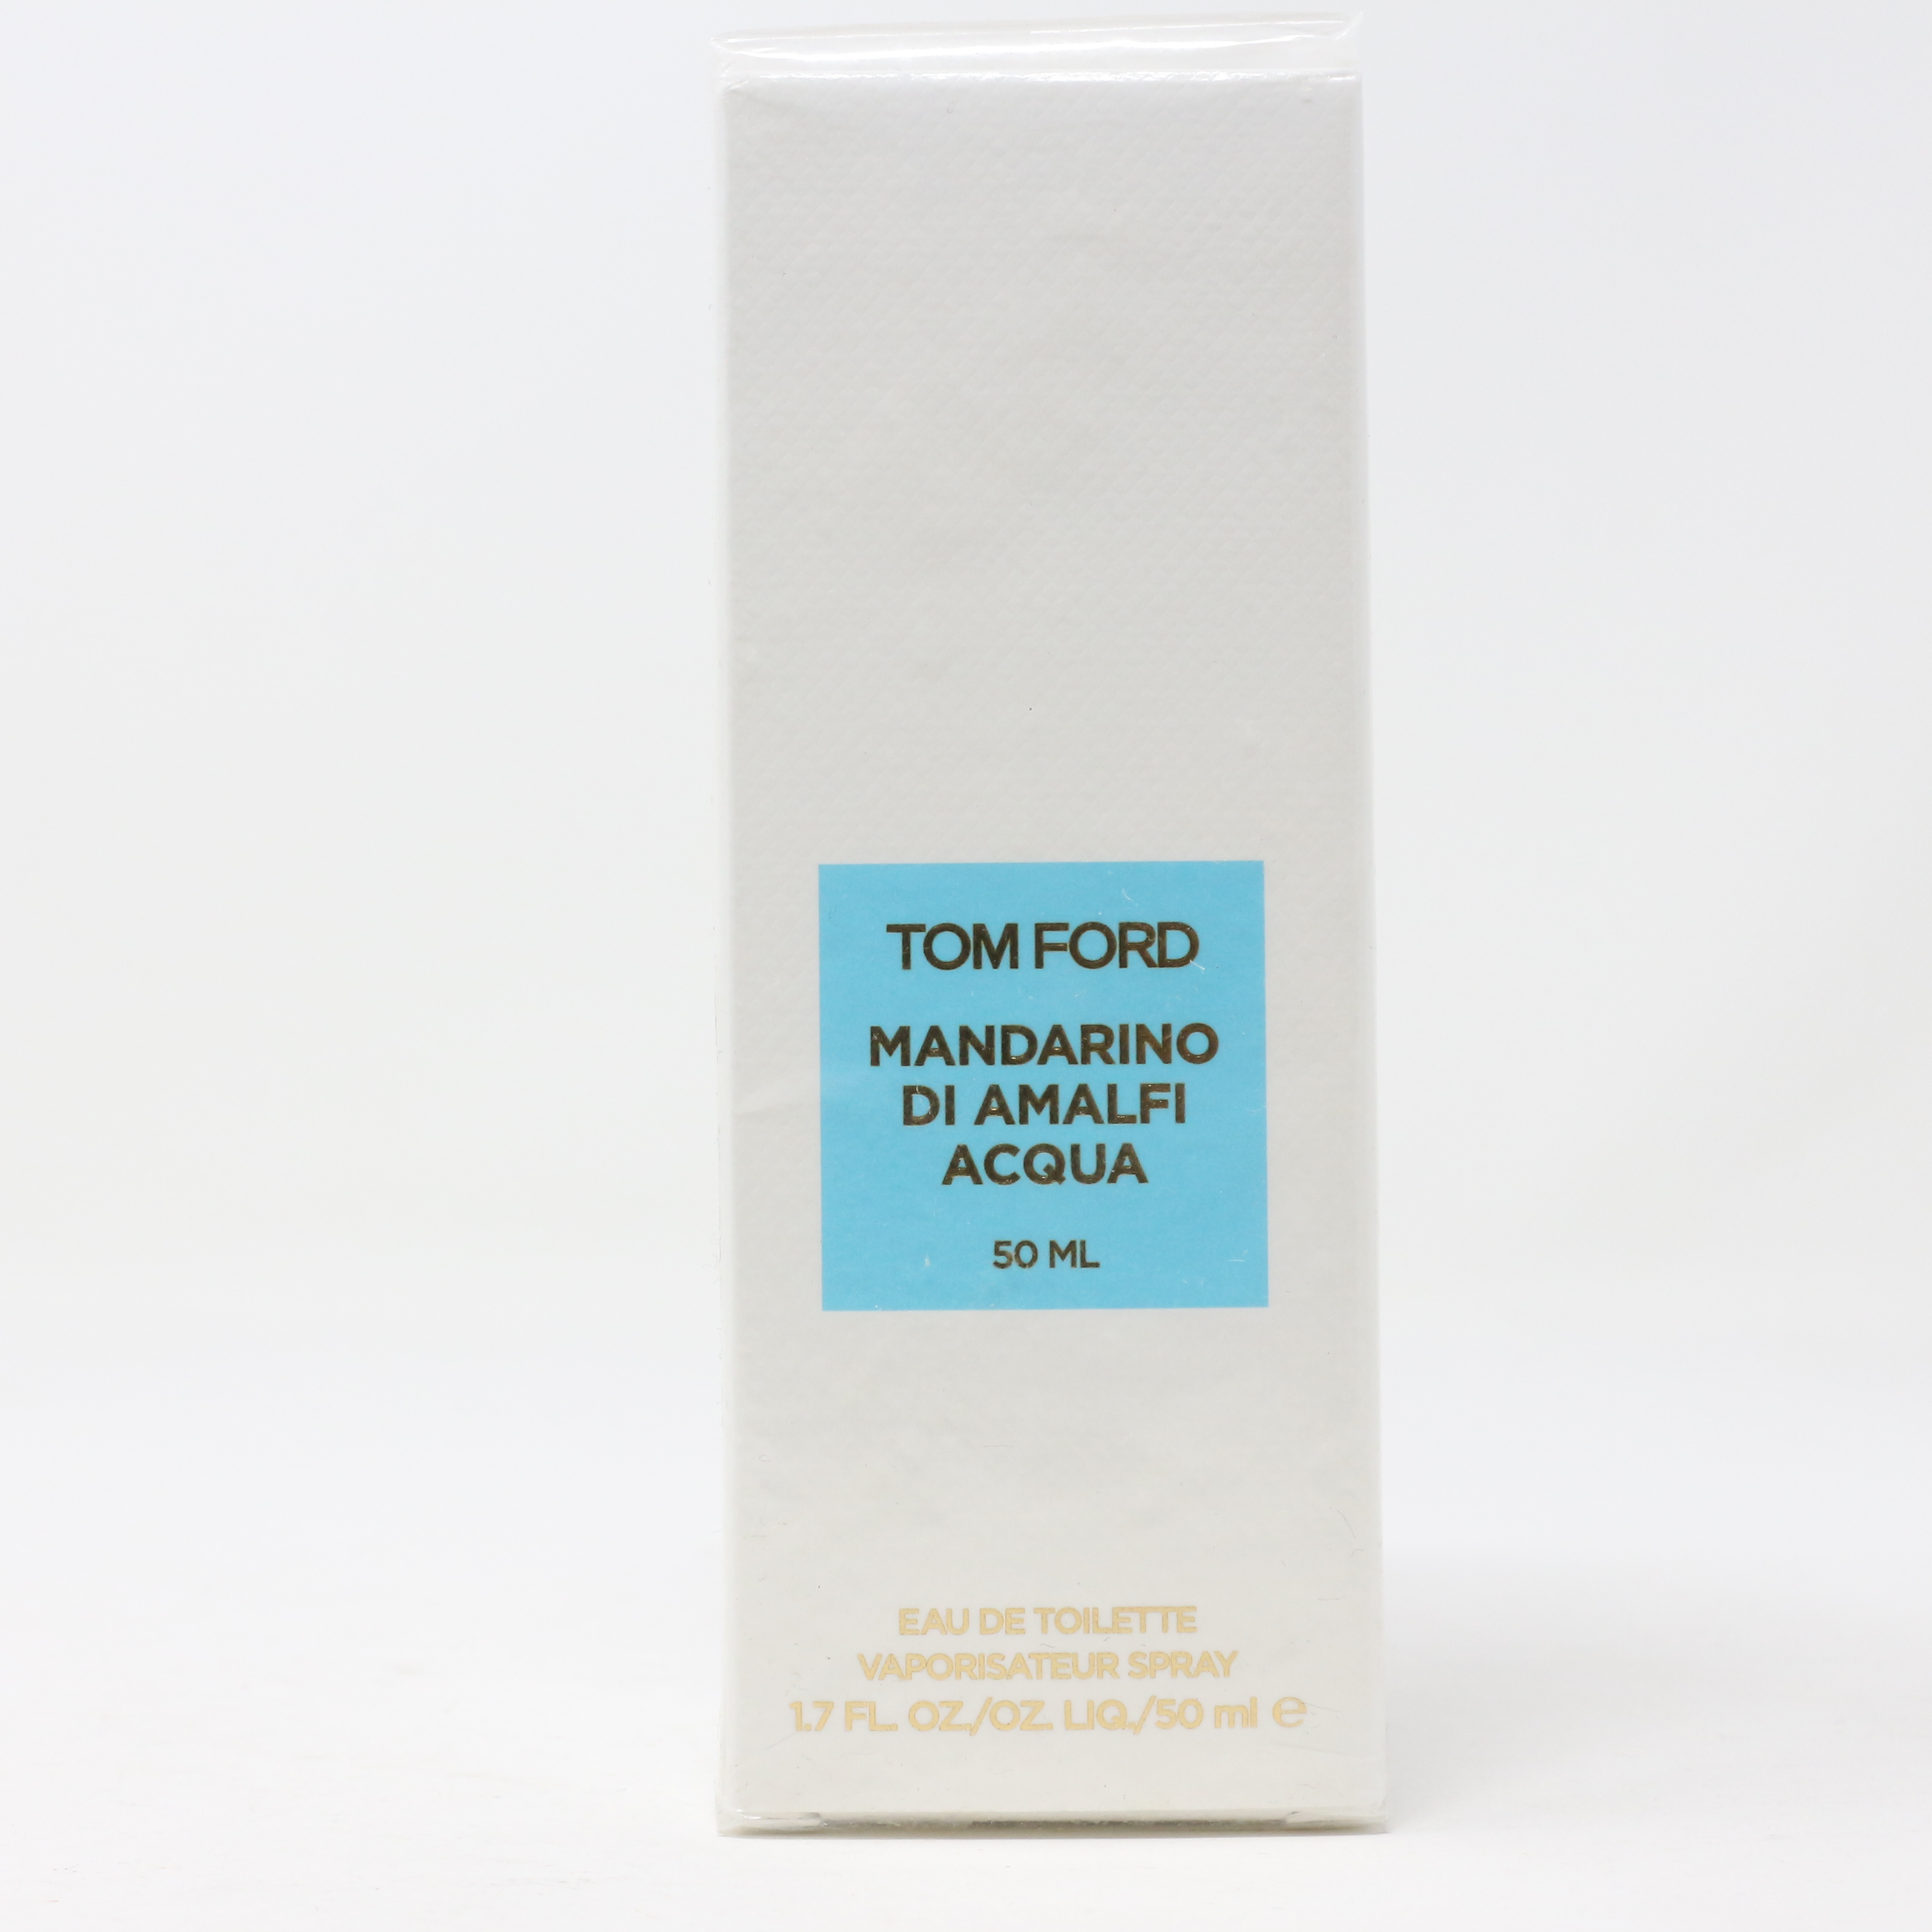 Tom Ford Mandarino Di Amalfi Acqua 50ml 1.7 oz Eau De Toilette Spray